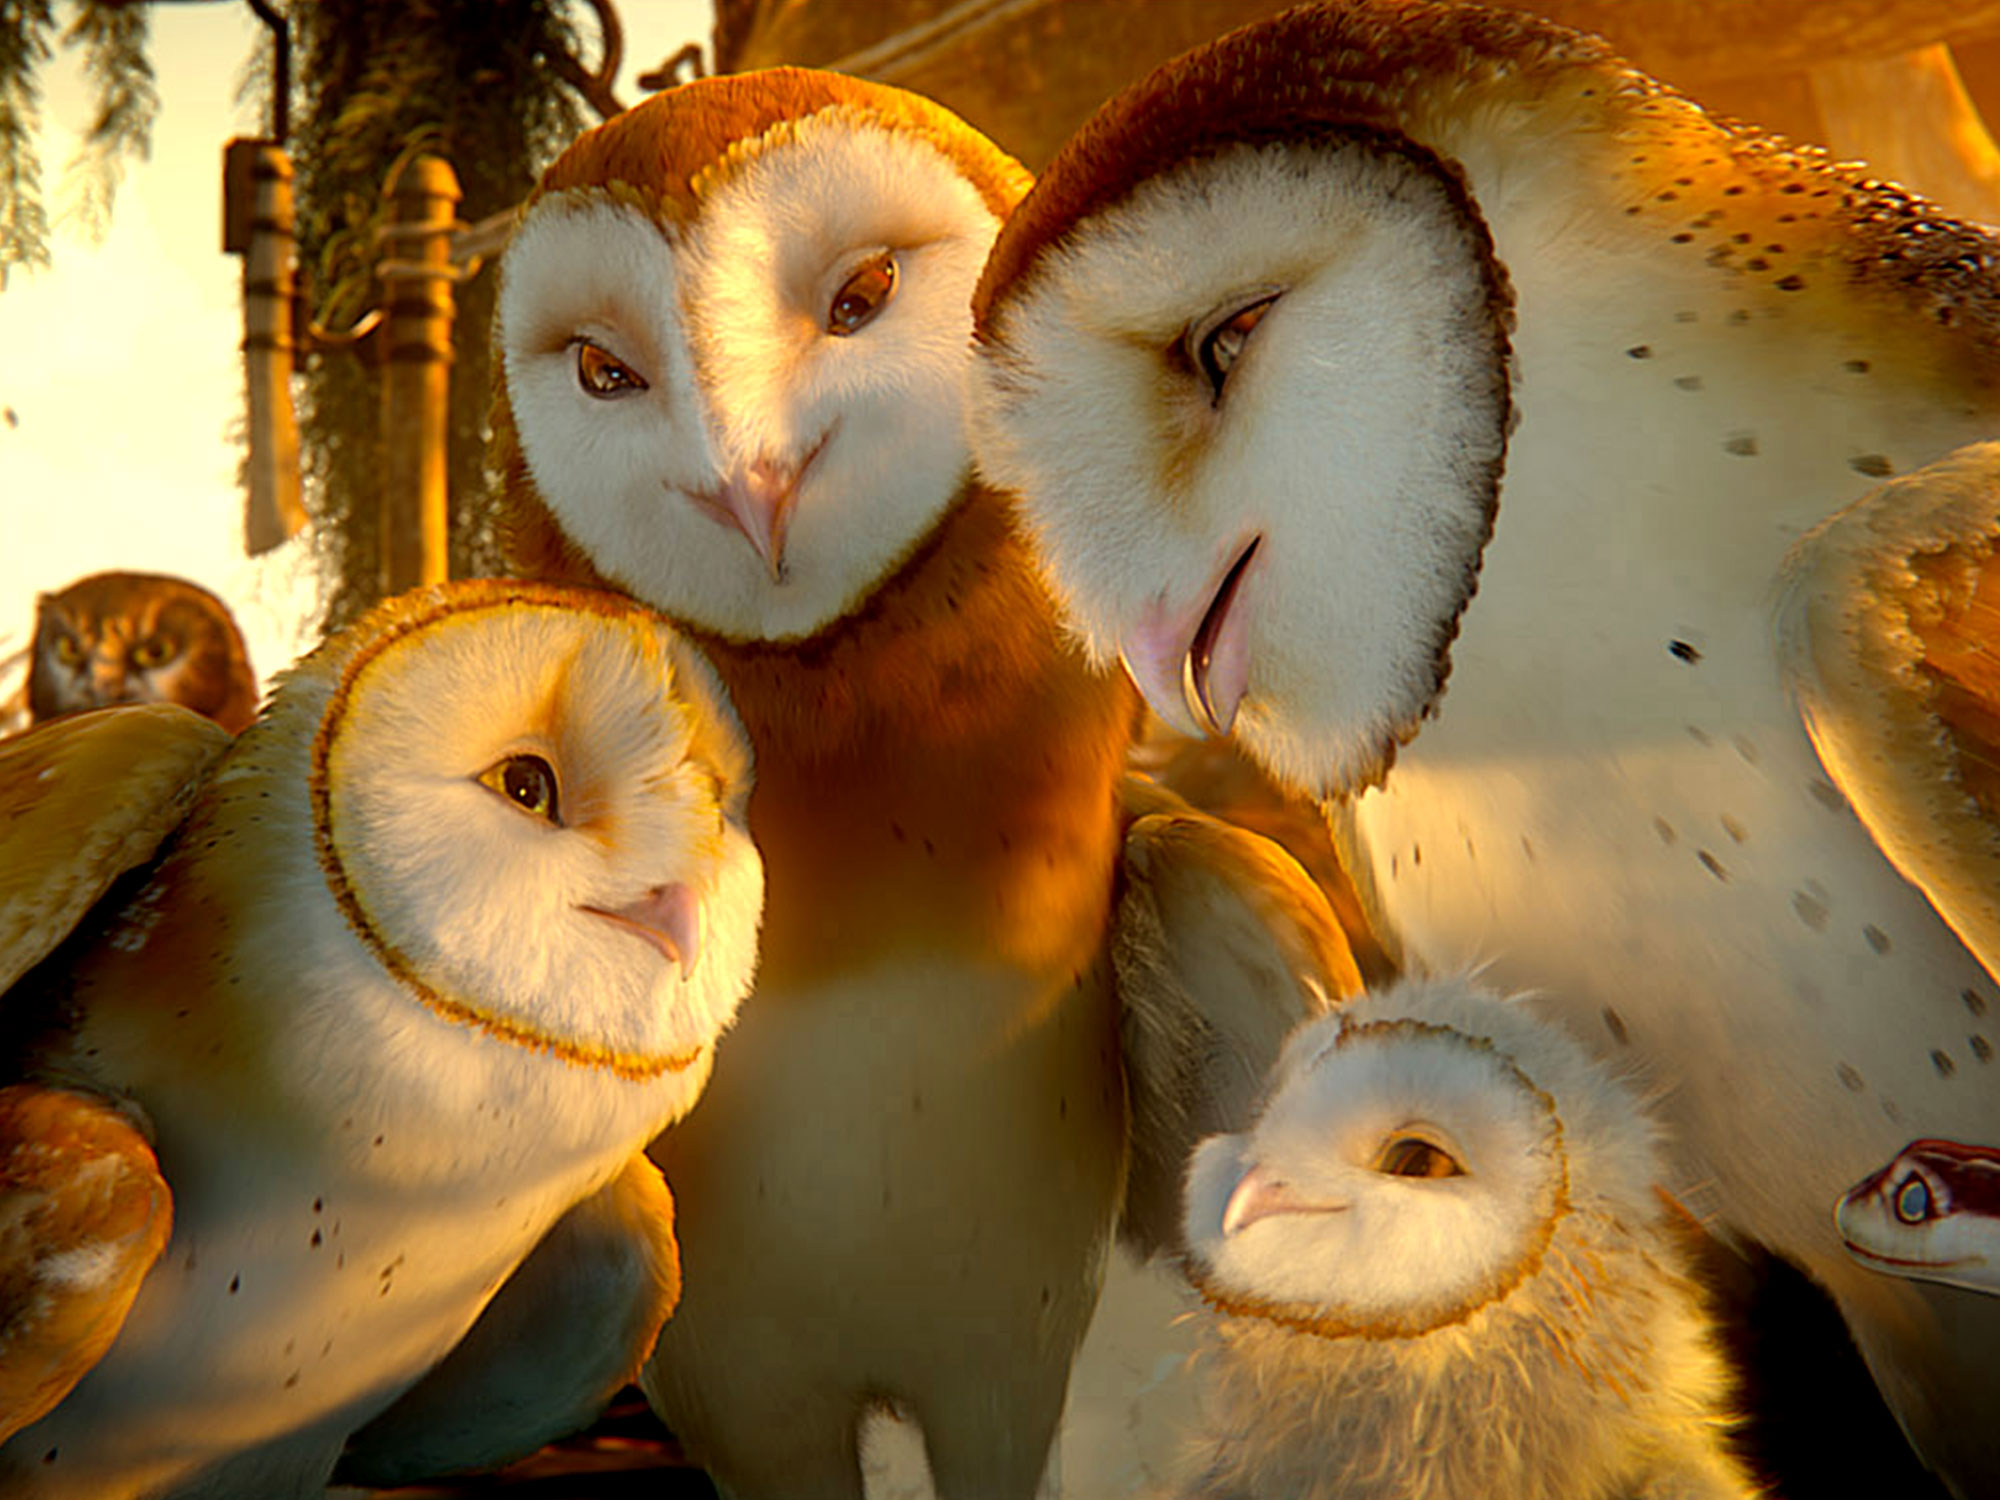 Legend Of The Guardians: The Owls Of Ga'Hoole HD wallpapers, Desktop wallpaper - most viewed